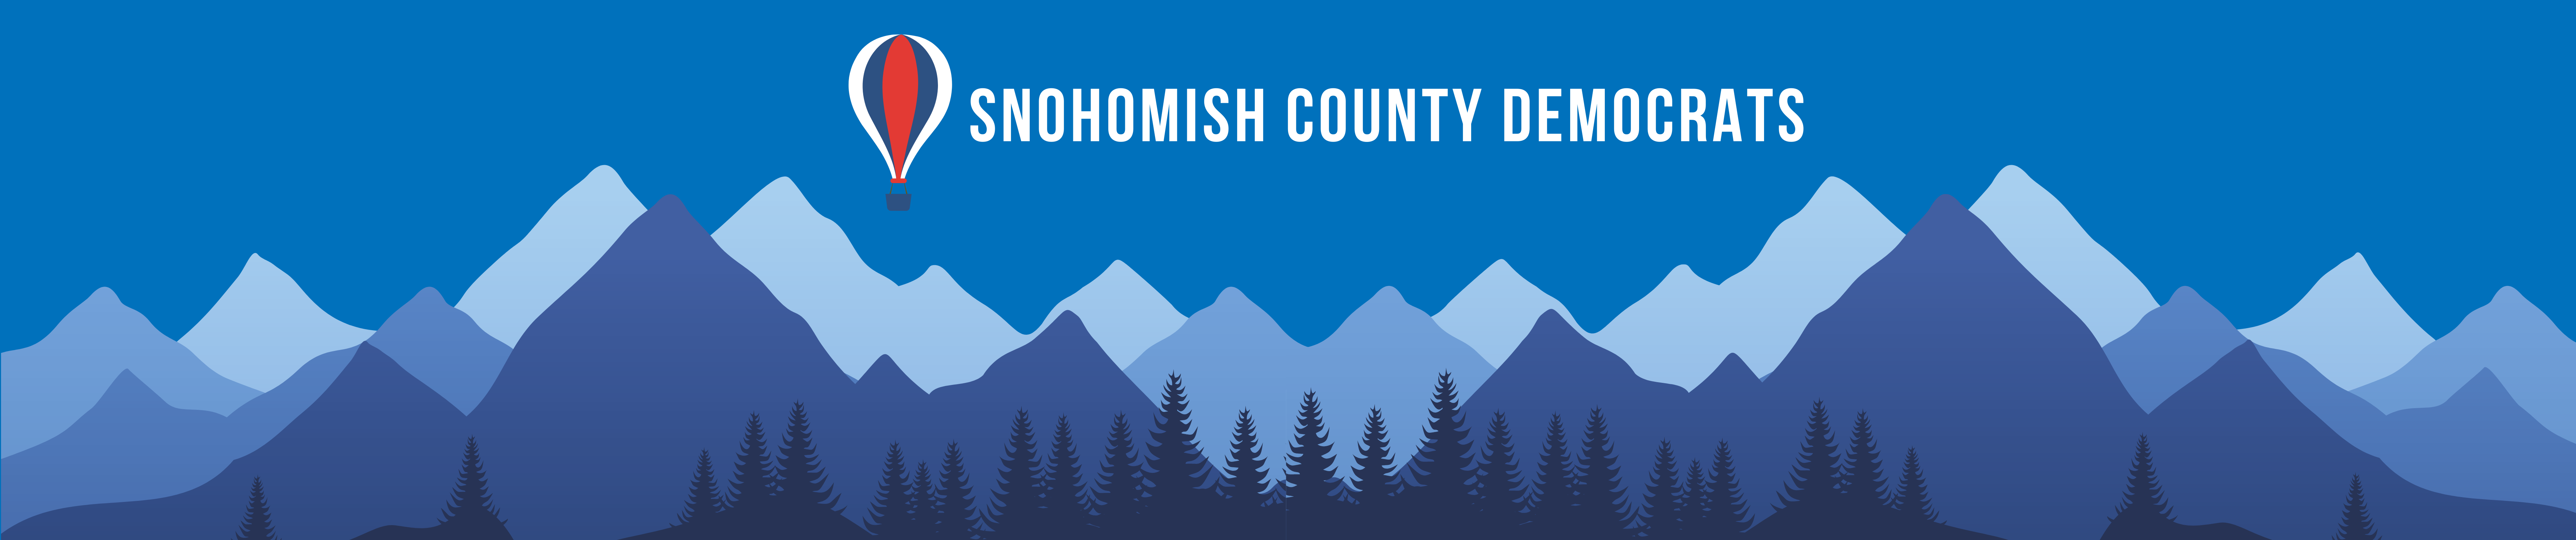 Snohomish County Democrats